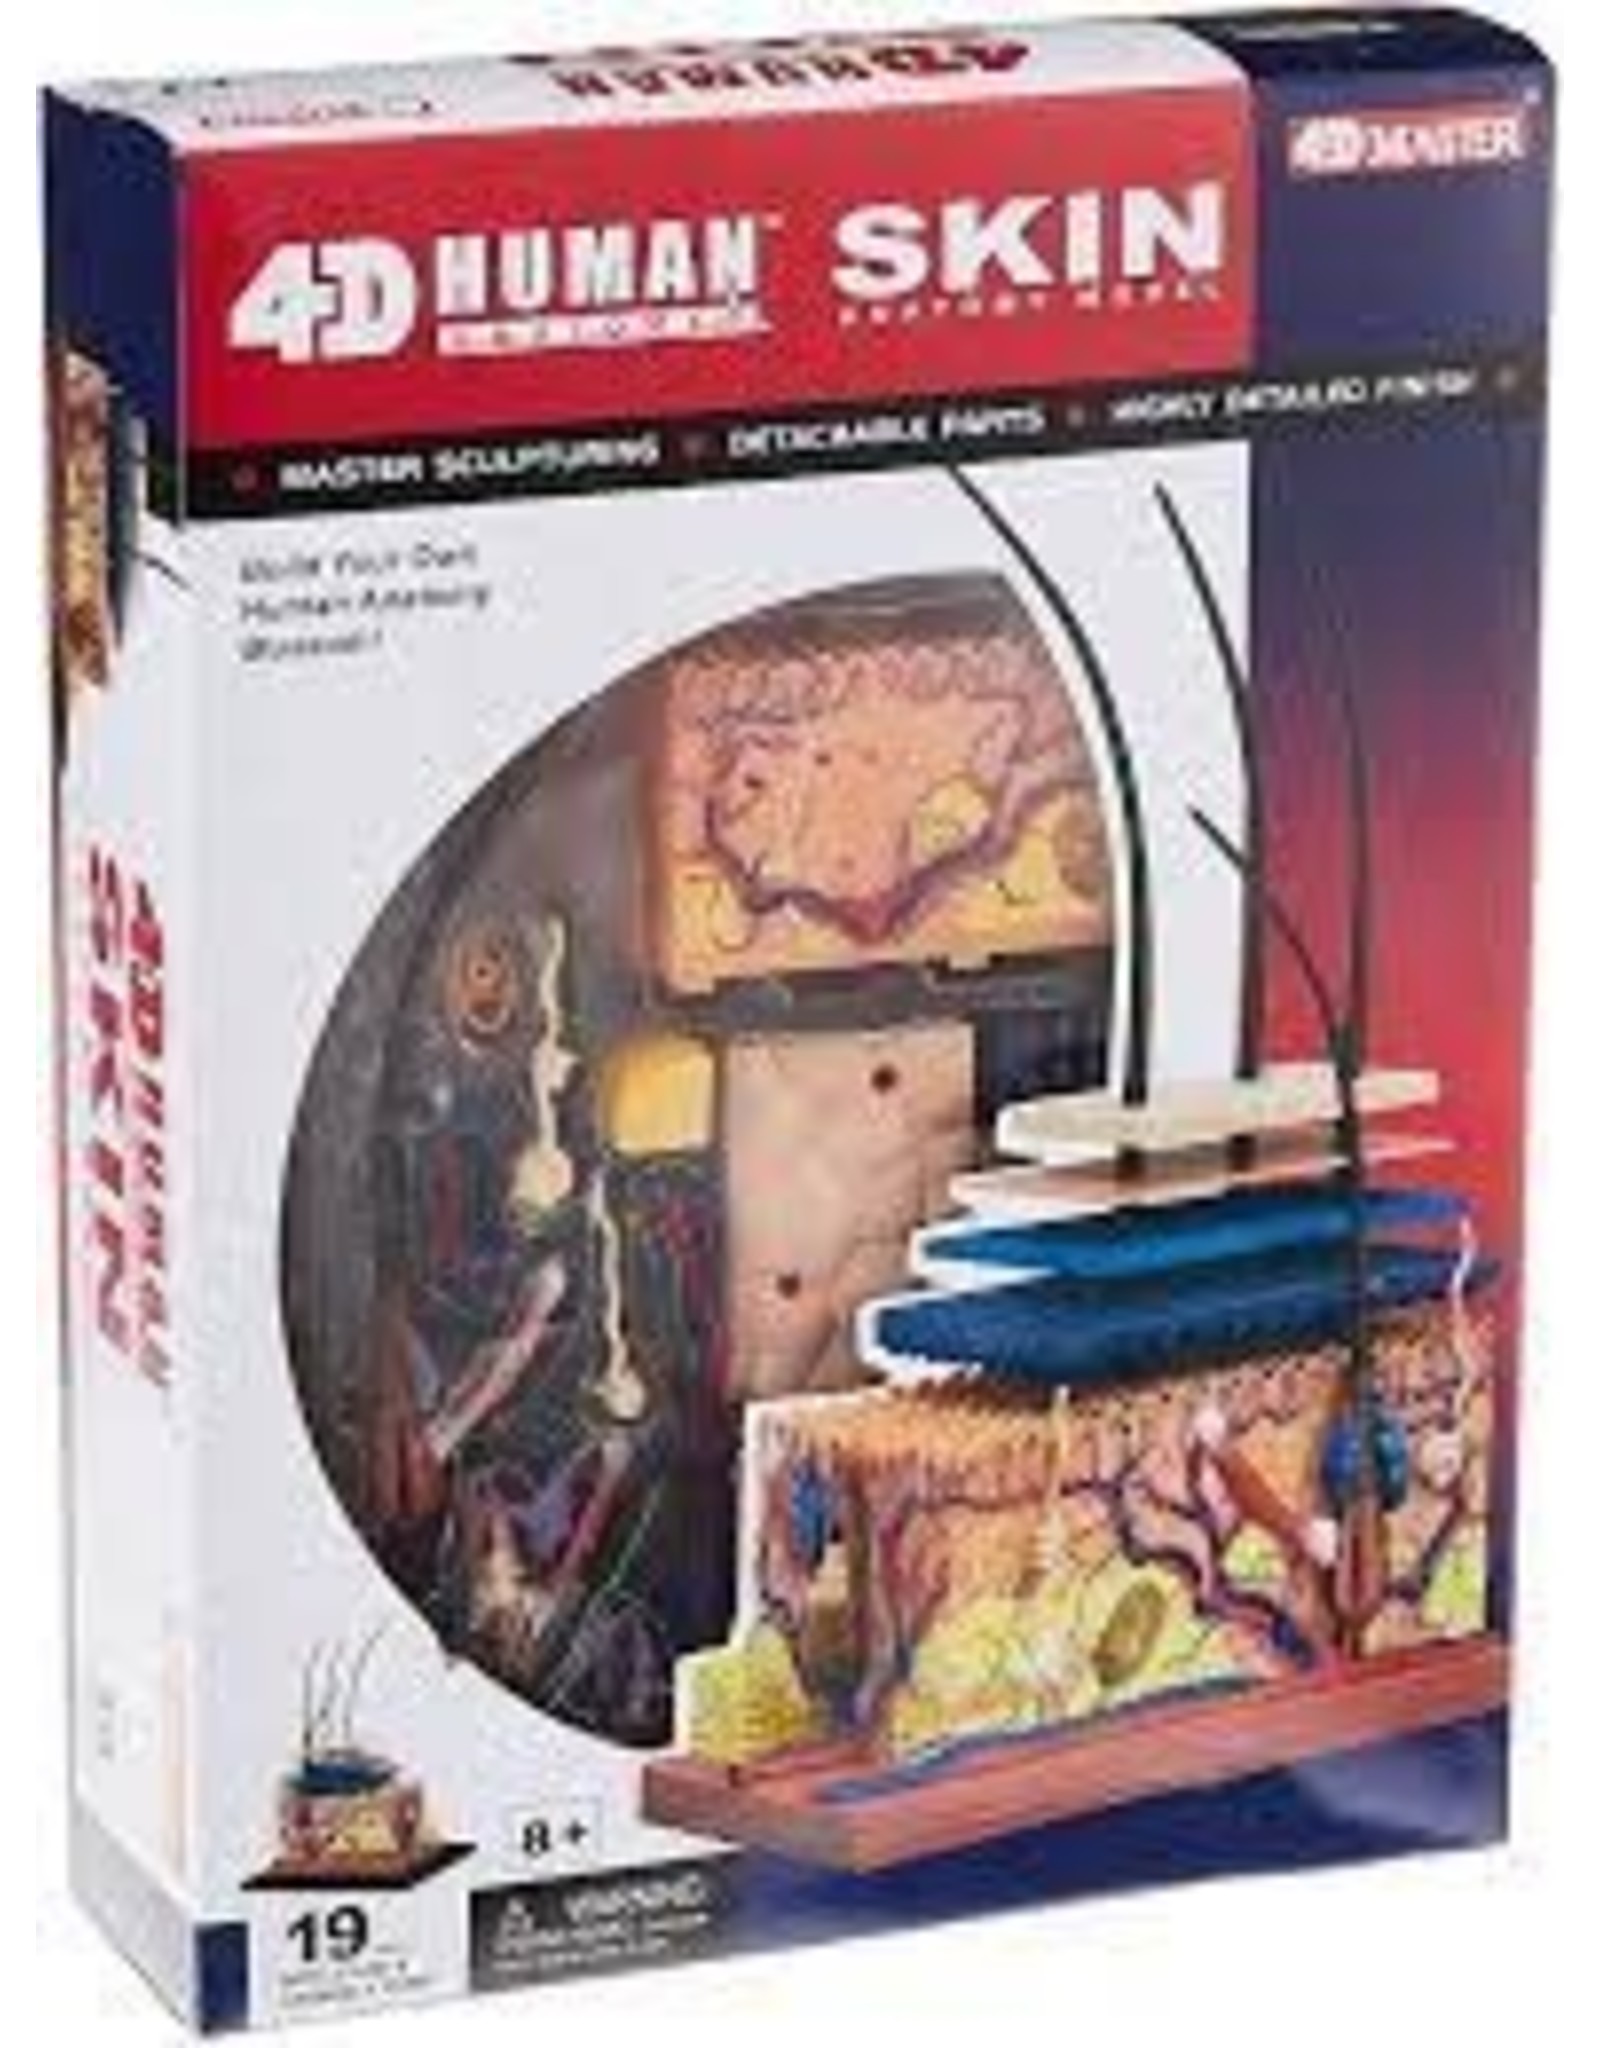 Human Skin Anatomy 4-D